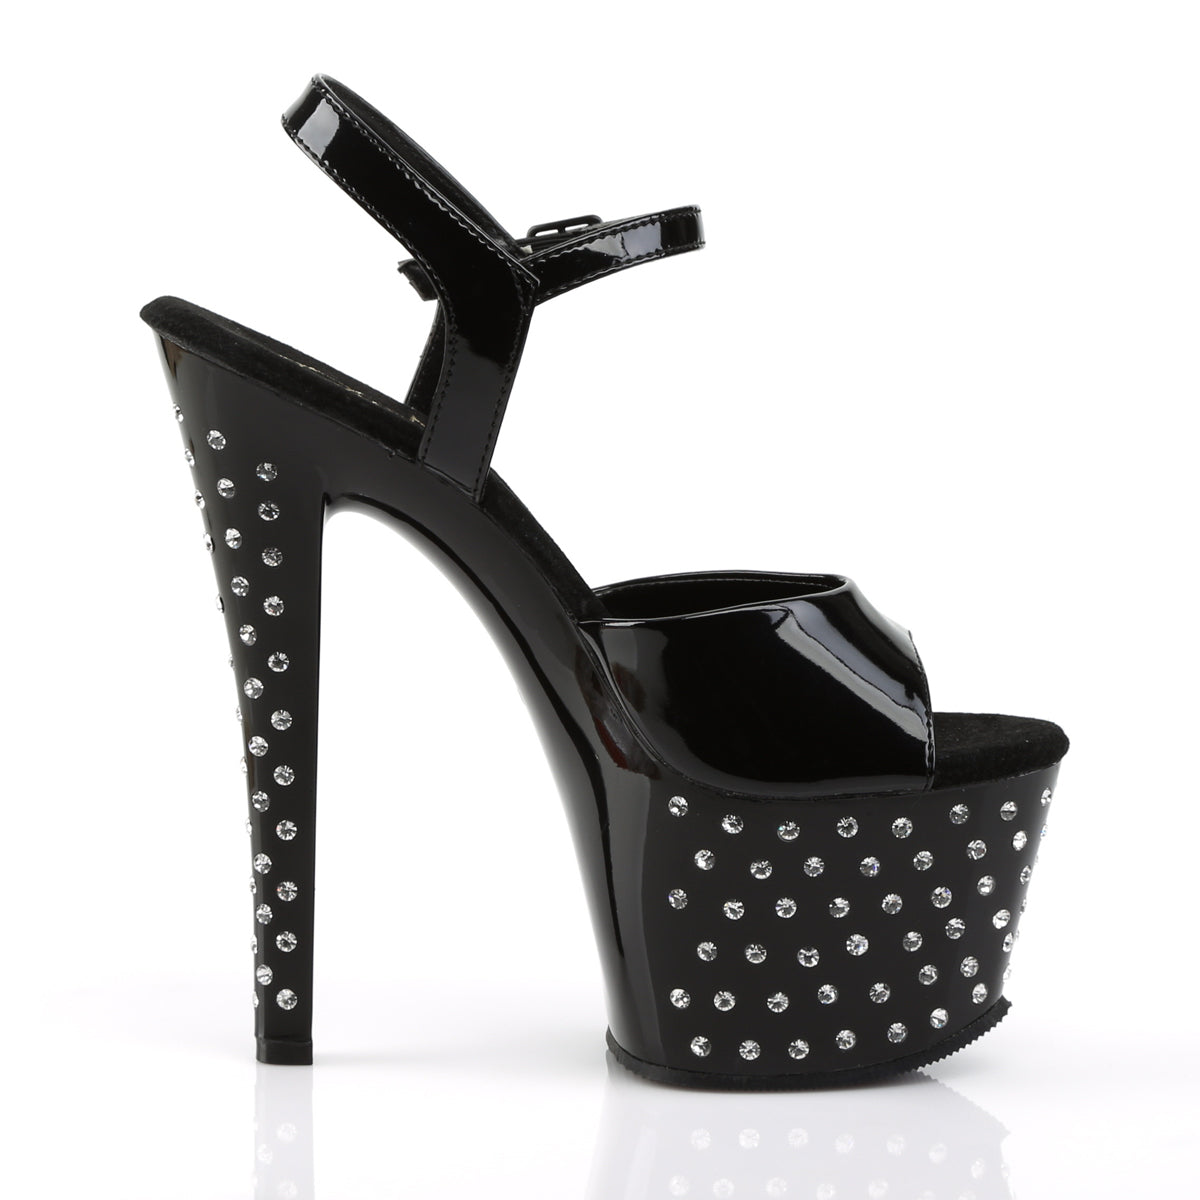 STARDUST-709 7 Inch Heel Black Patent Pole Dancing Platforms-Pleaser- Sexy Shoes Fetish Heels